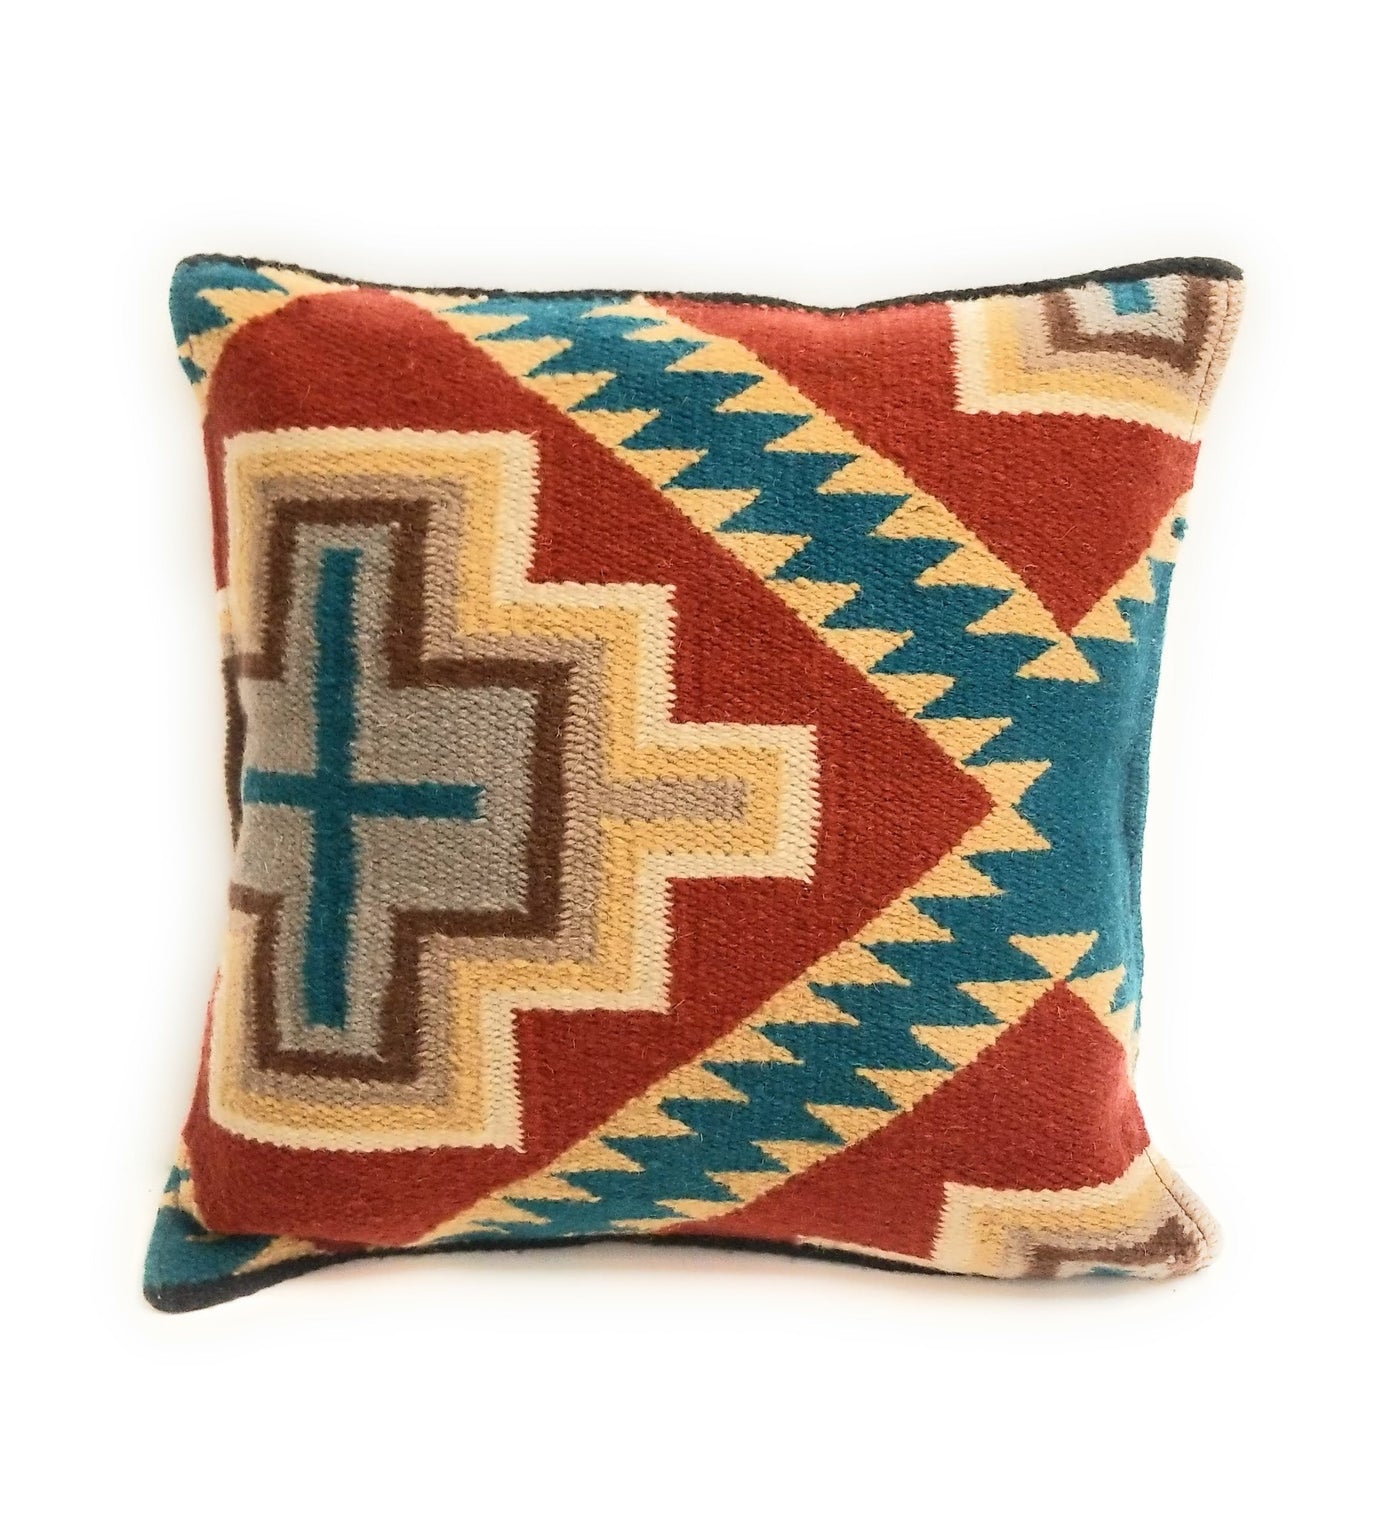 Boho Cushion Cover 18" - Tufted Textured Handwoven Throw